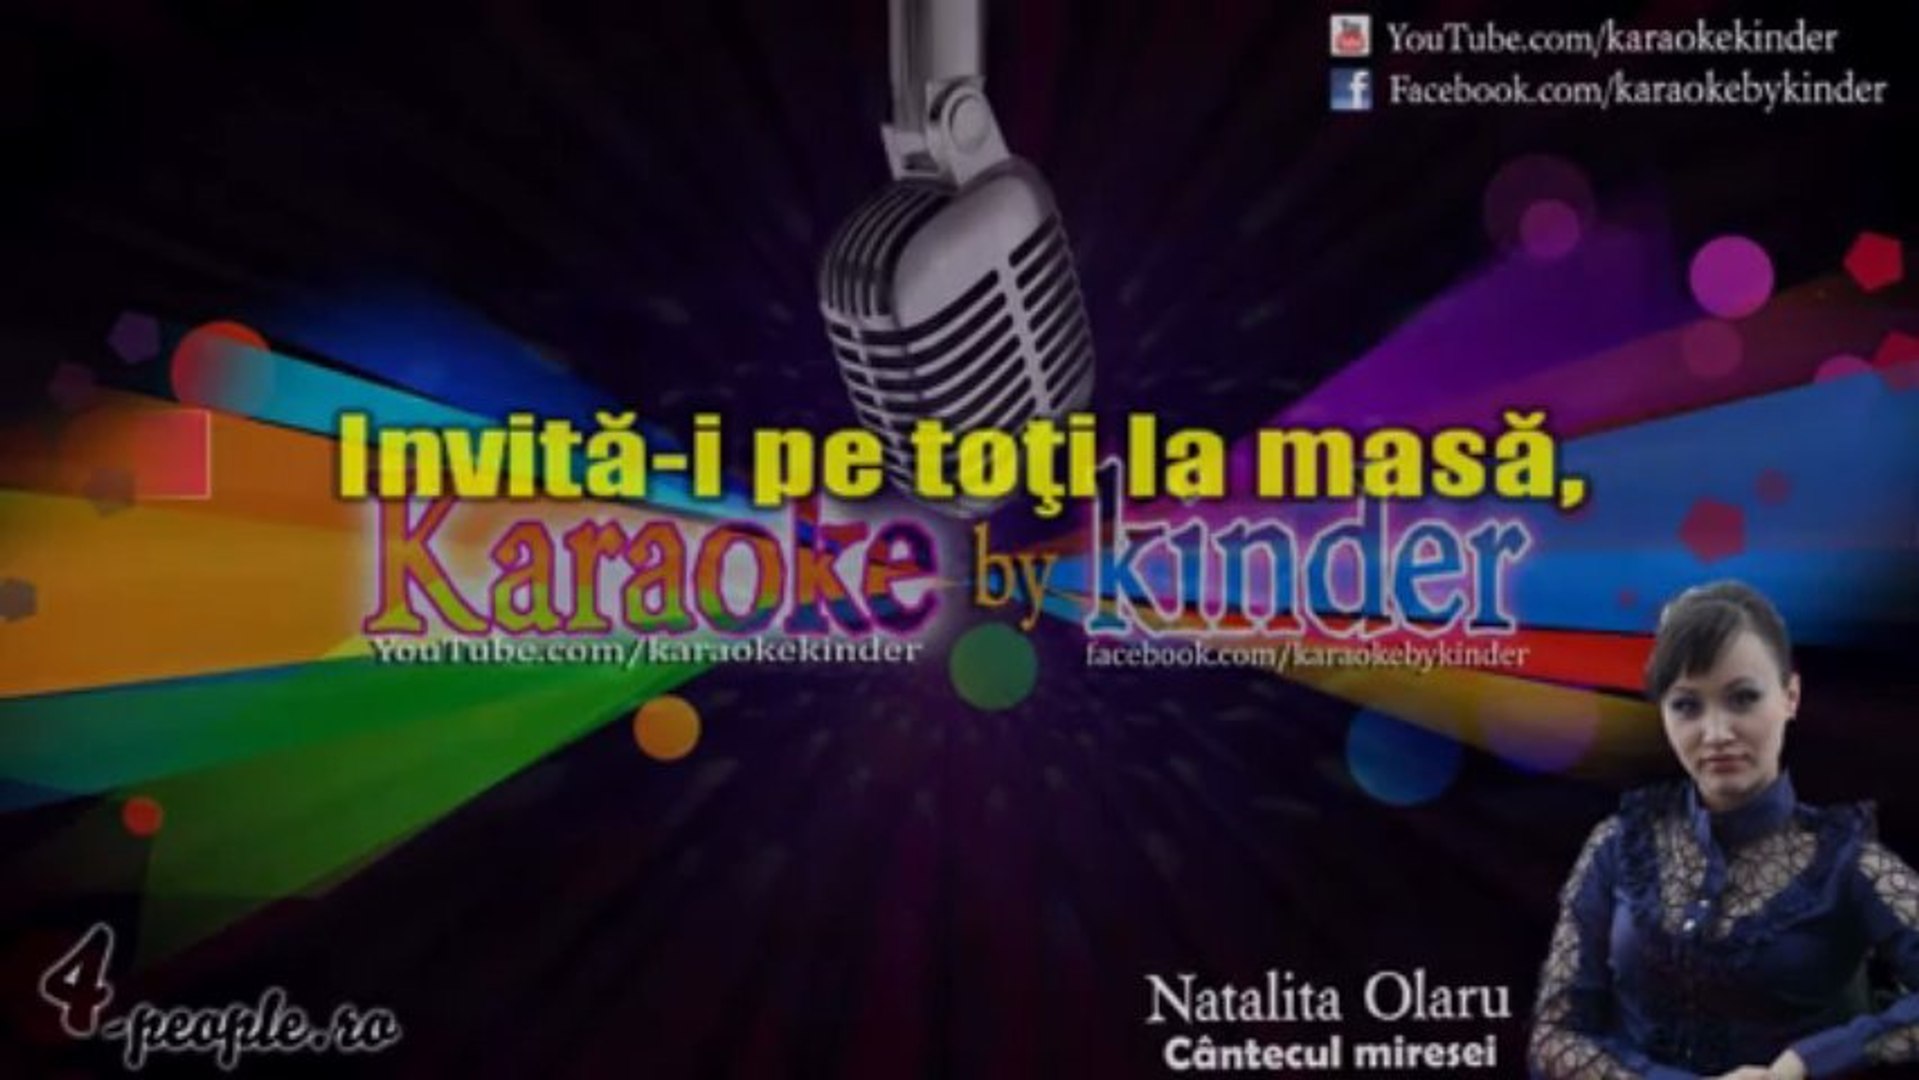 stil Natalita Olaru - Cantecul miresei [Karaoke by kinder]